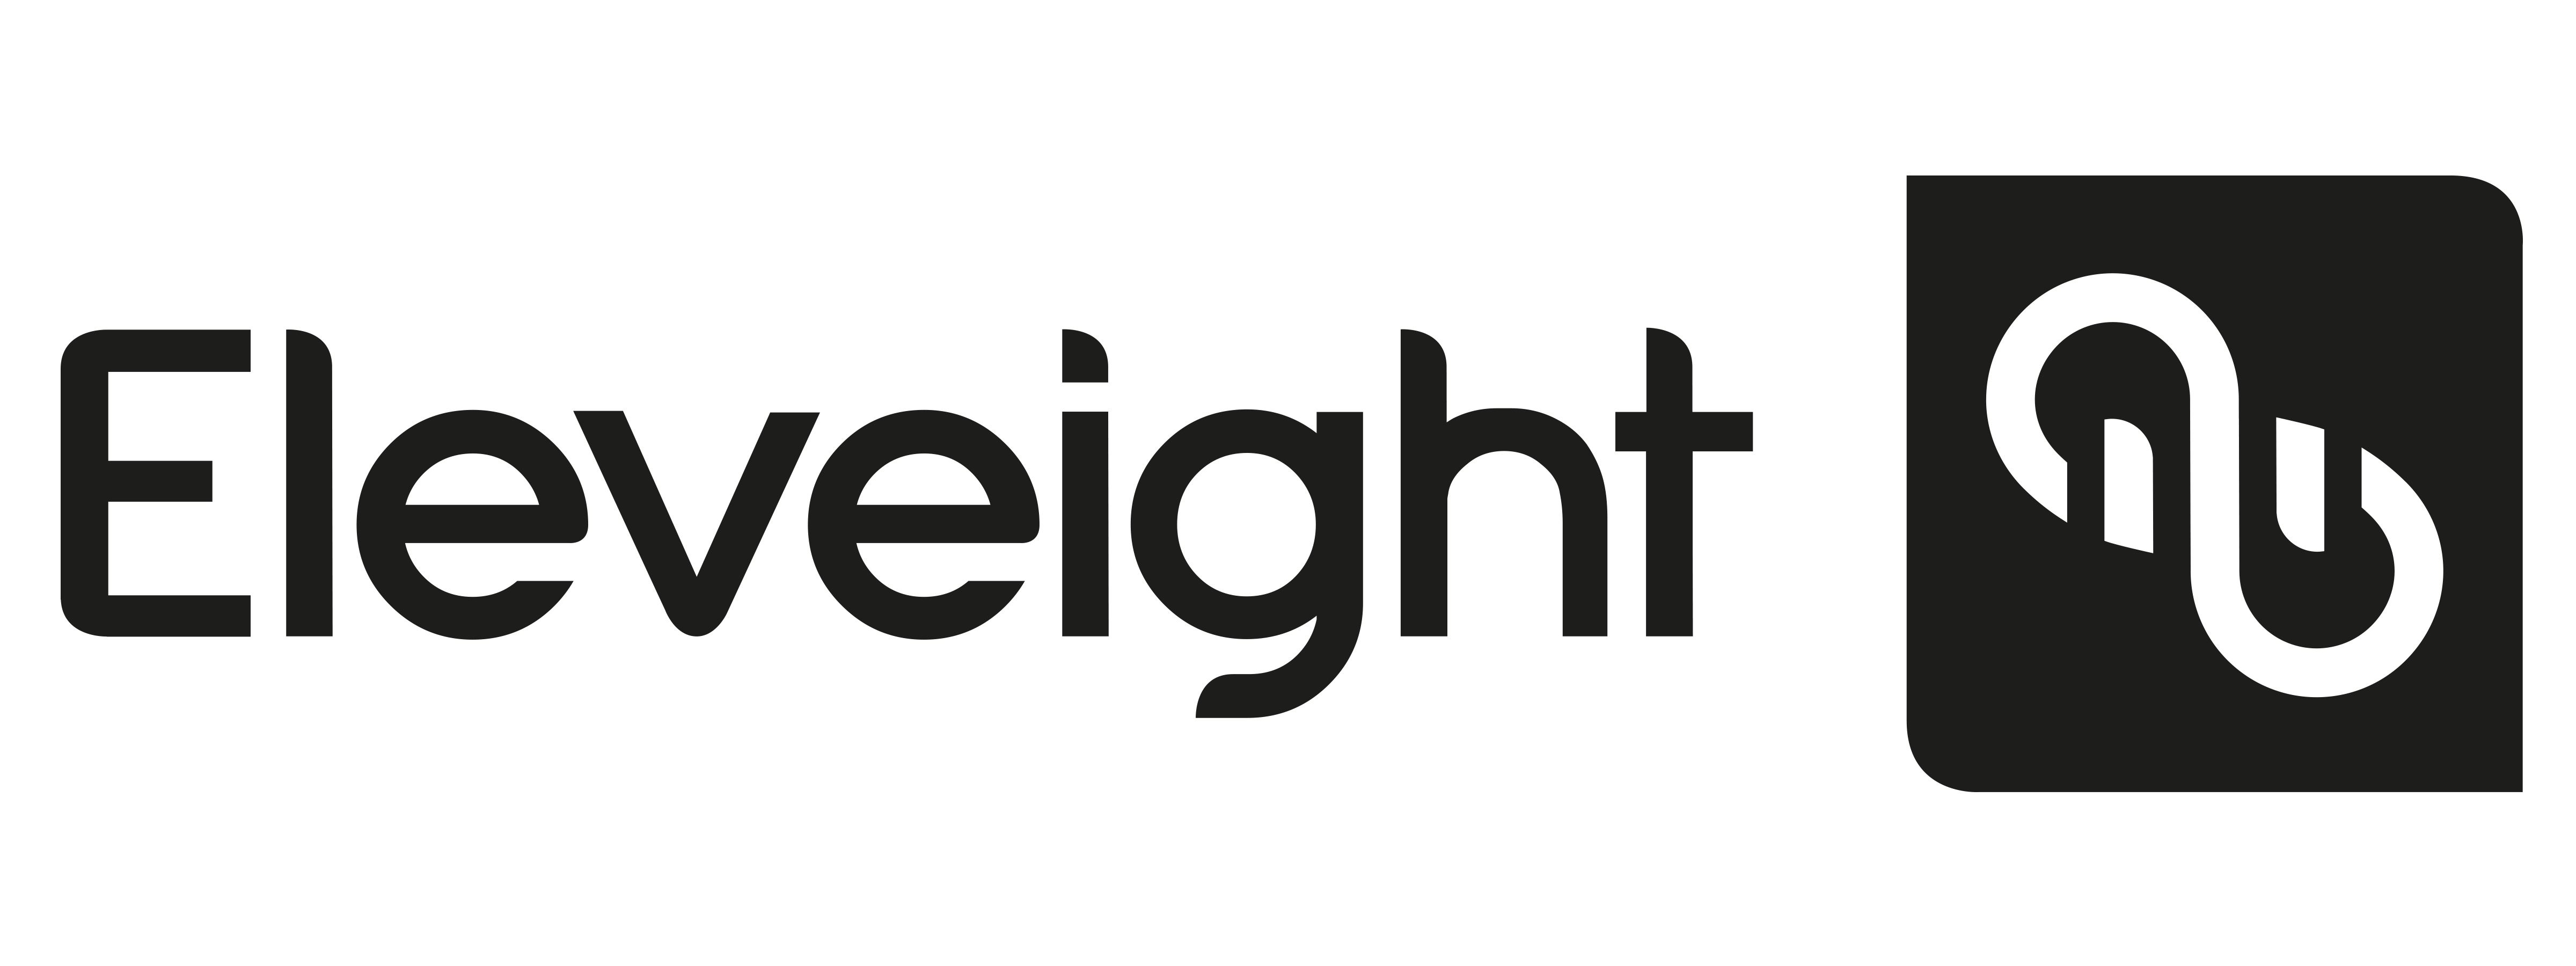 Eleveight logo